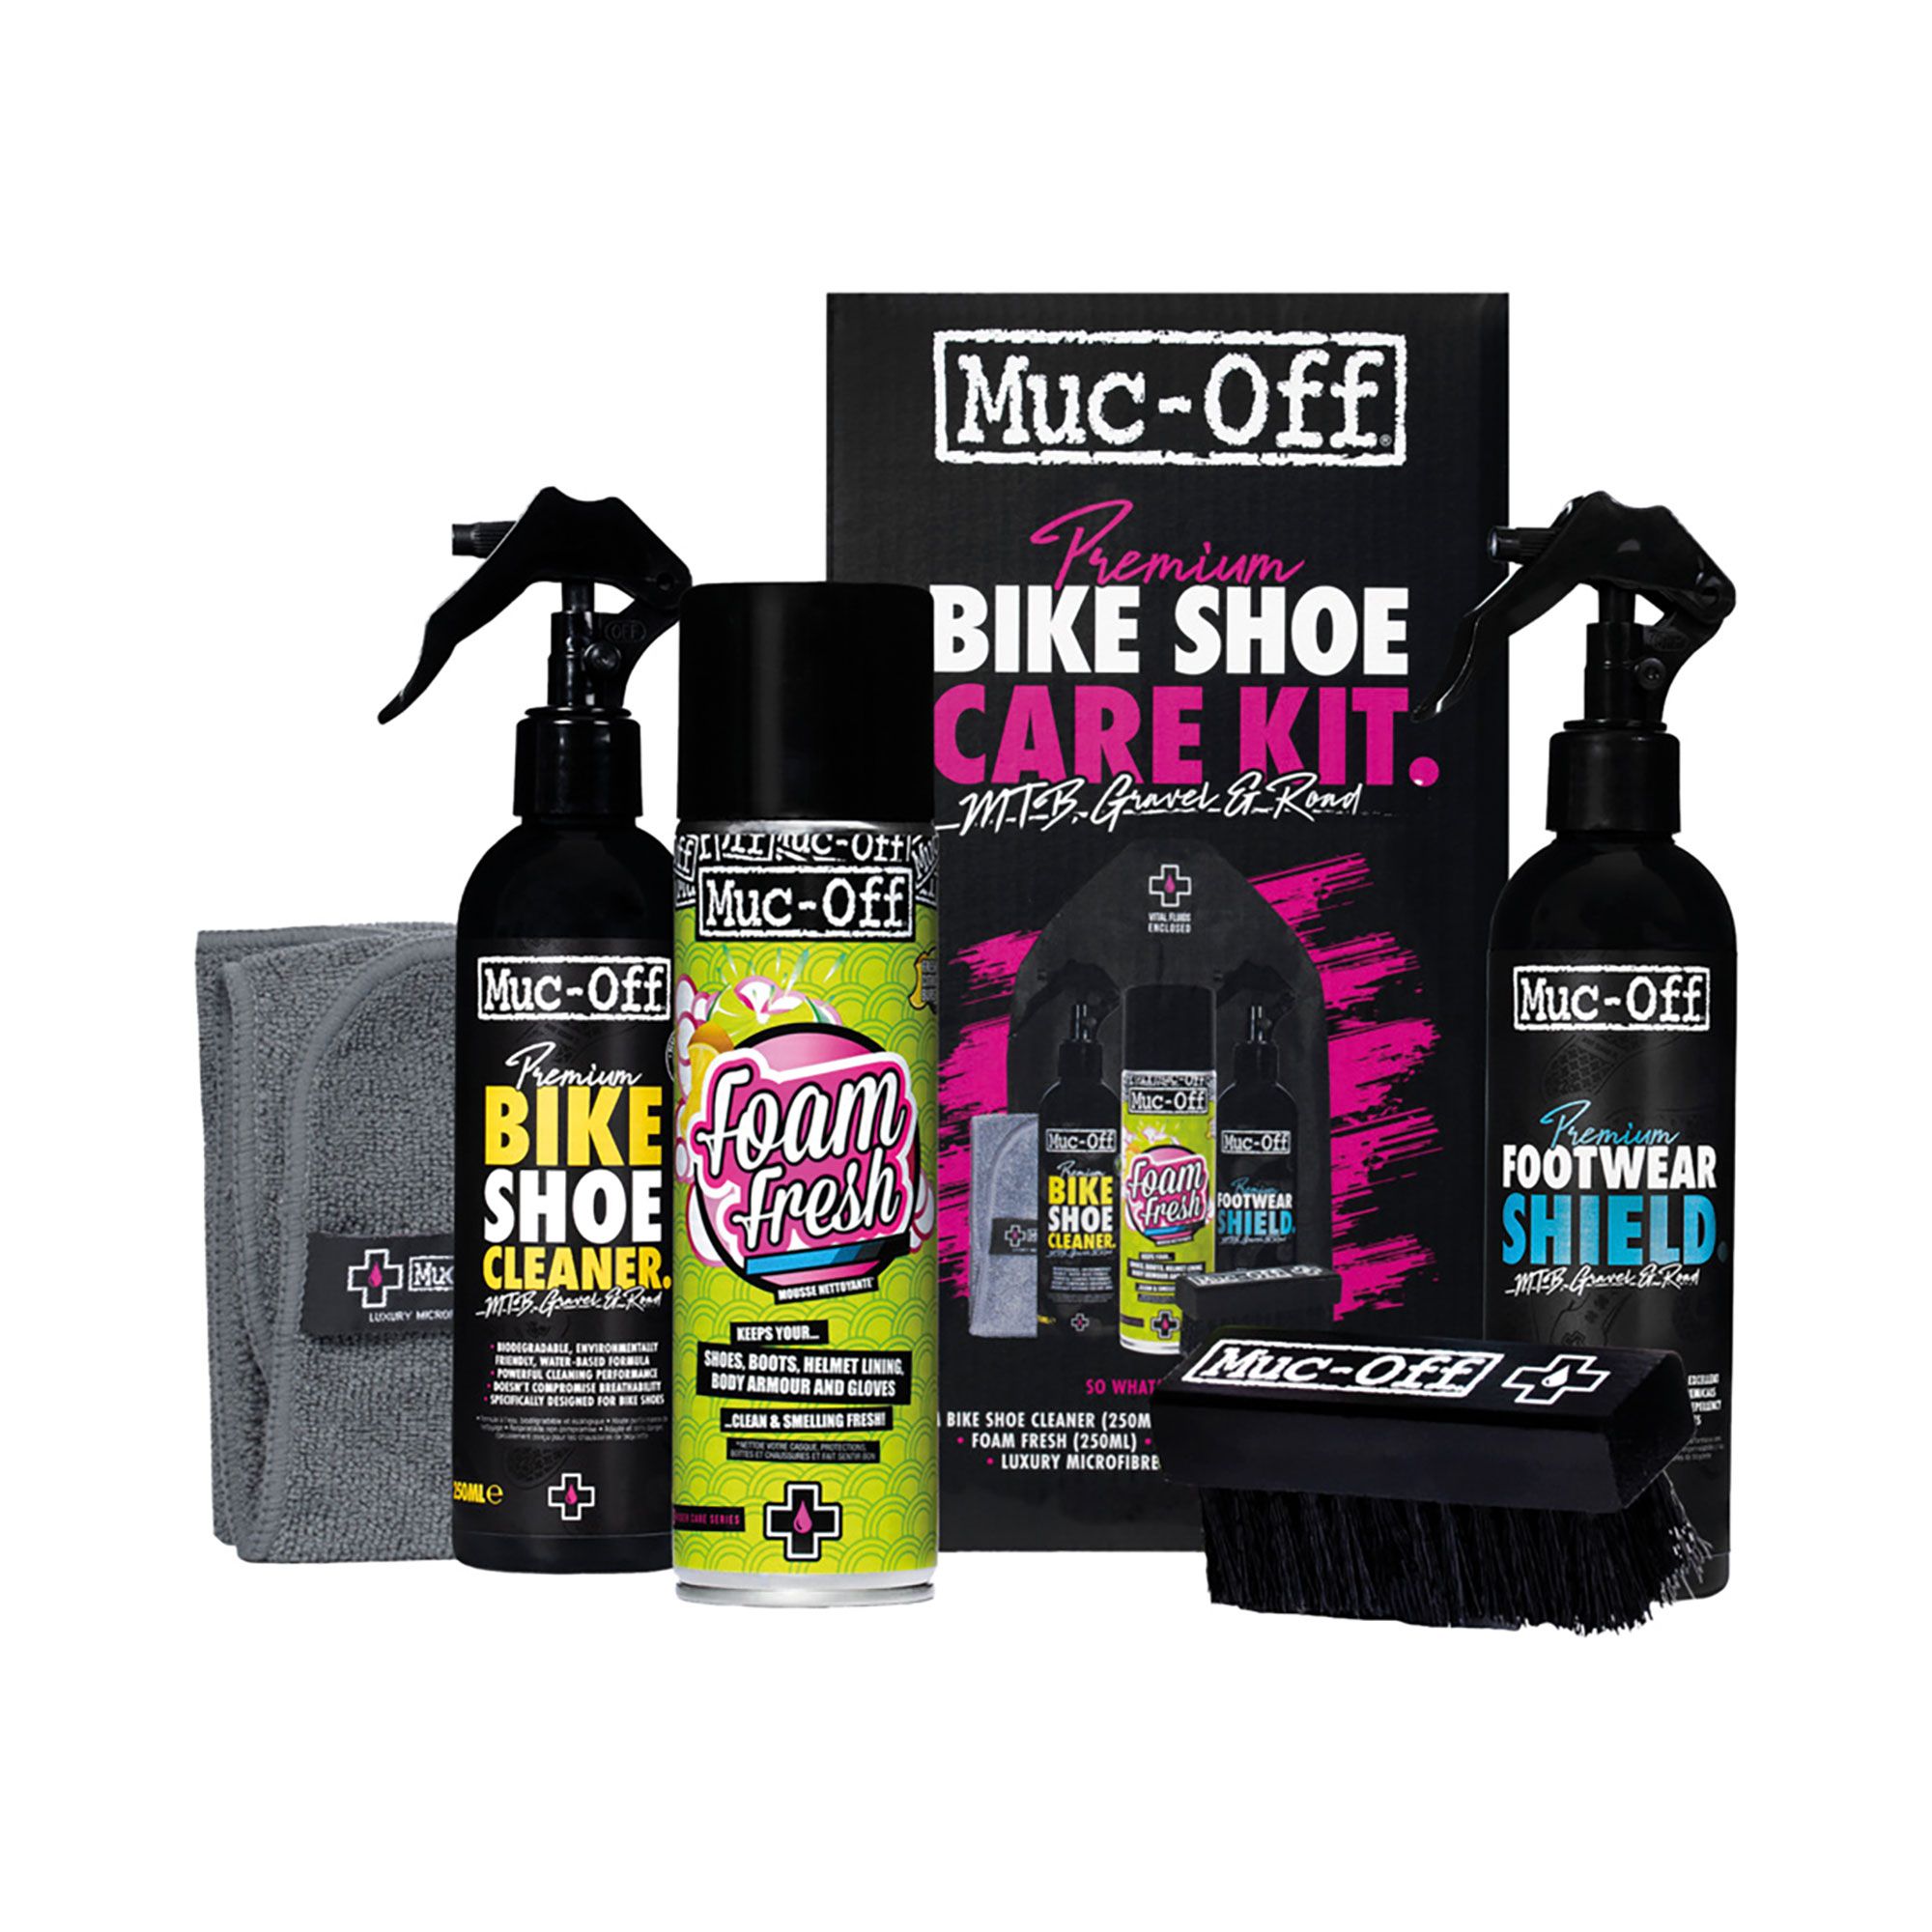 Muc-Off Premium Bike Shoe Care Kit